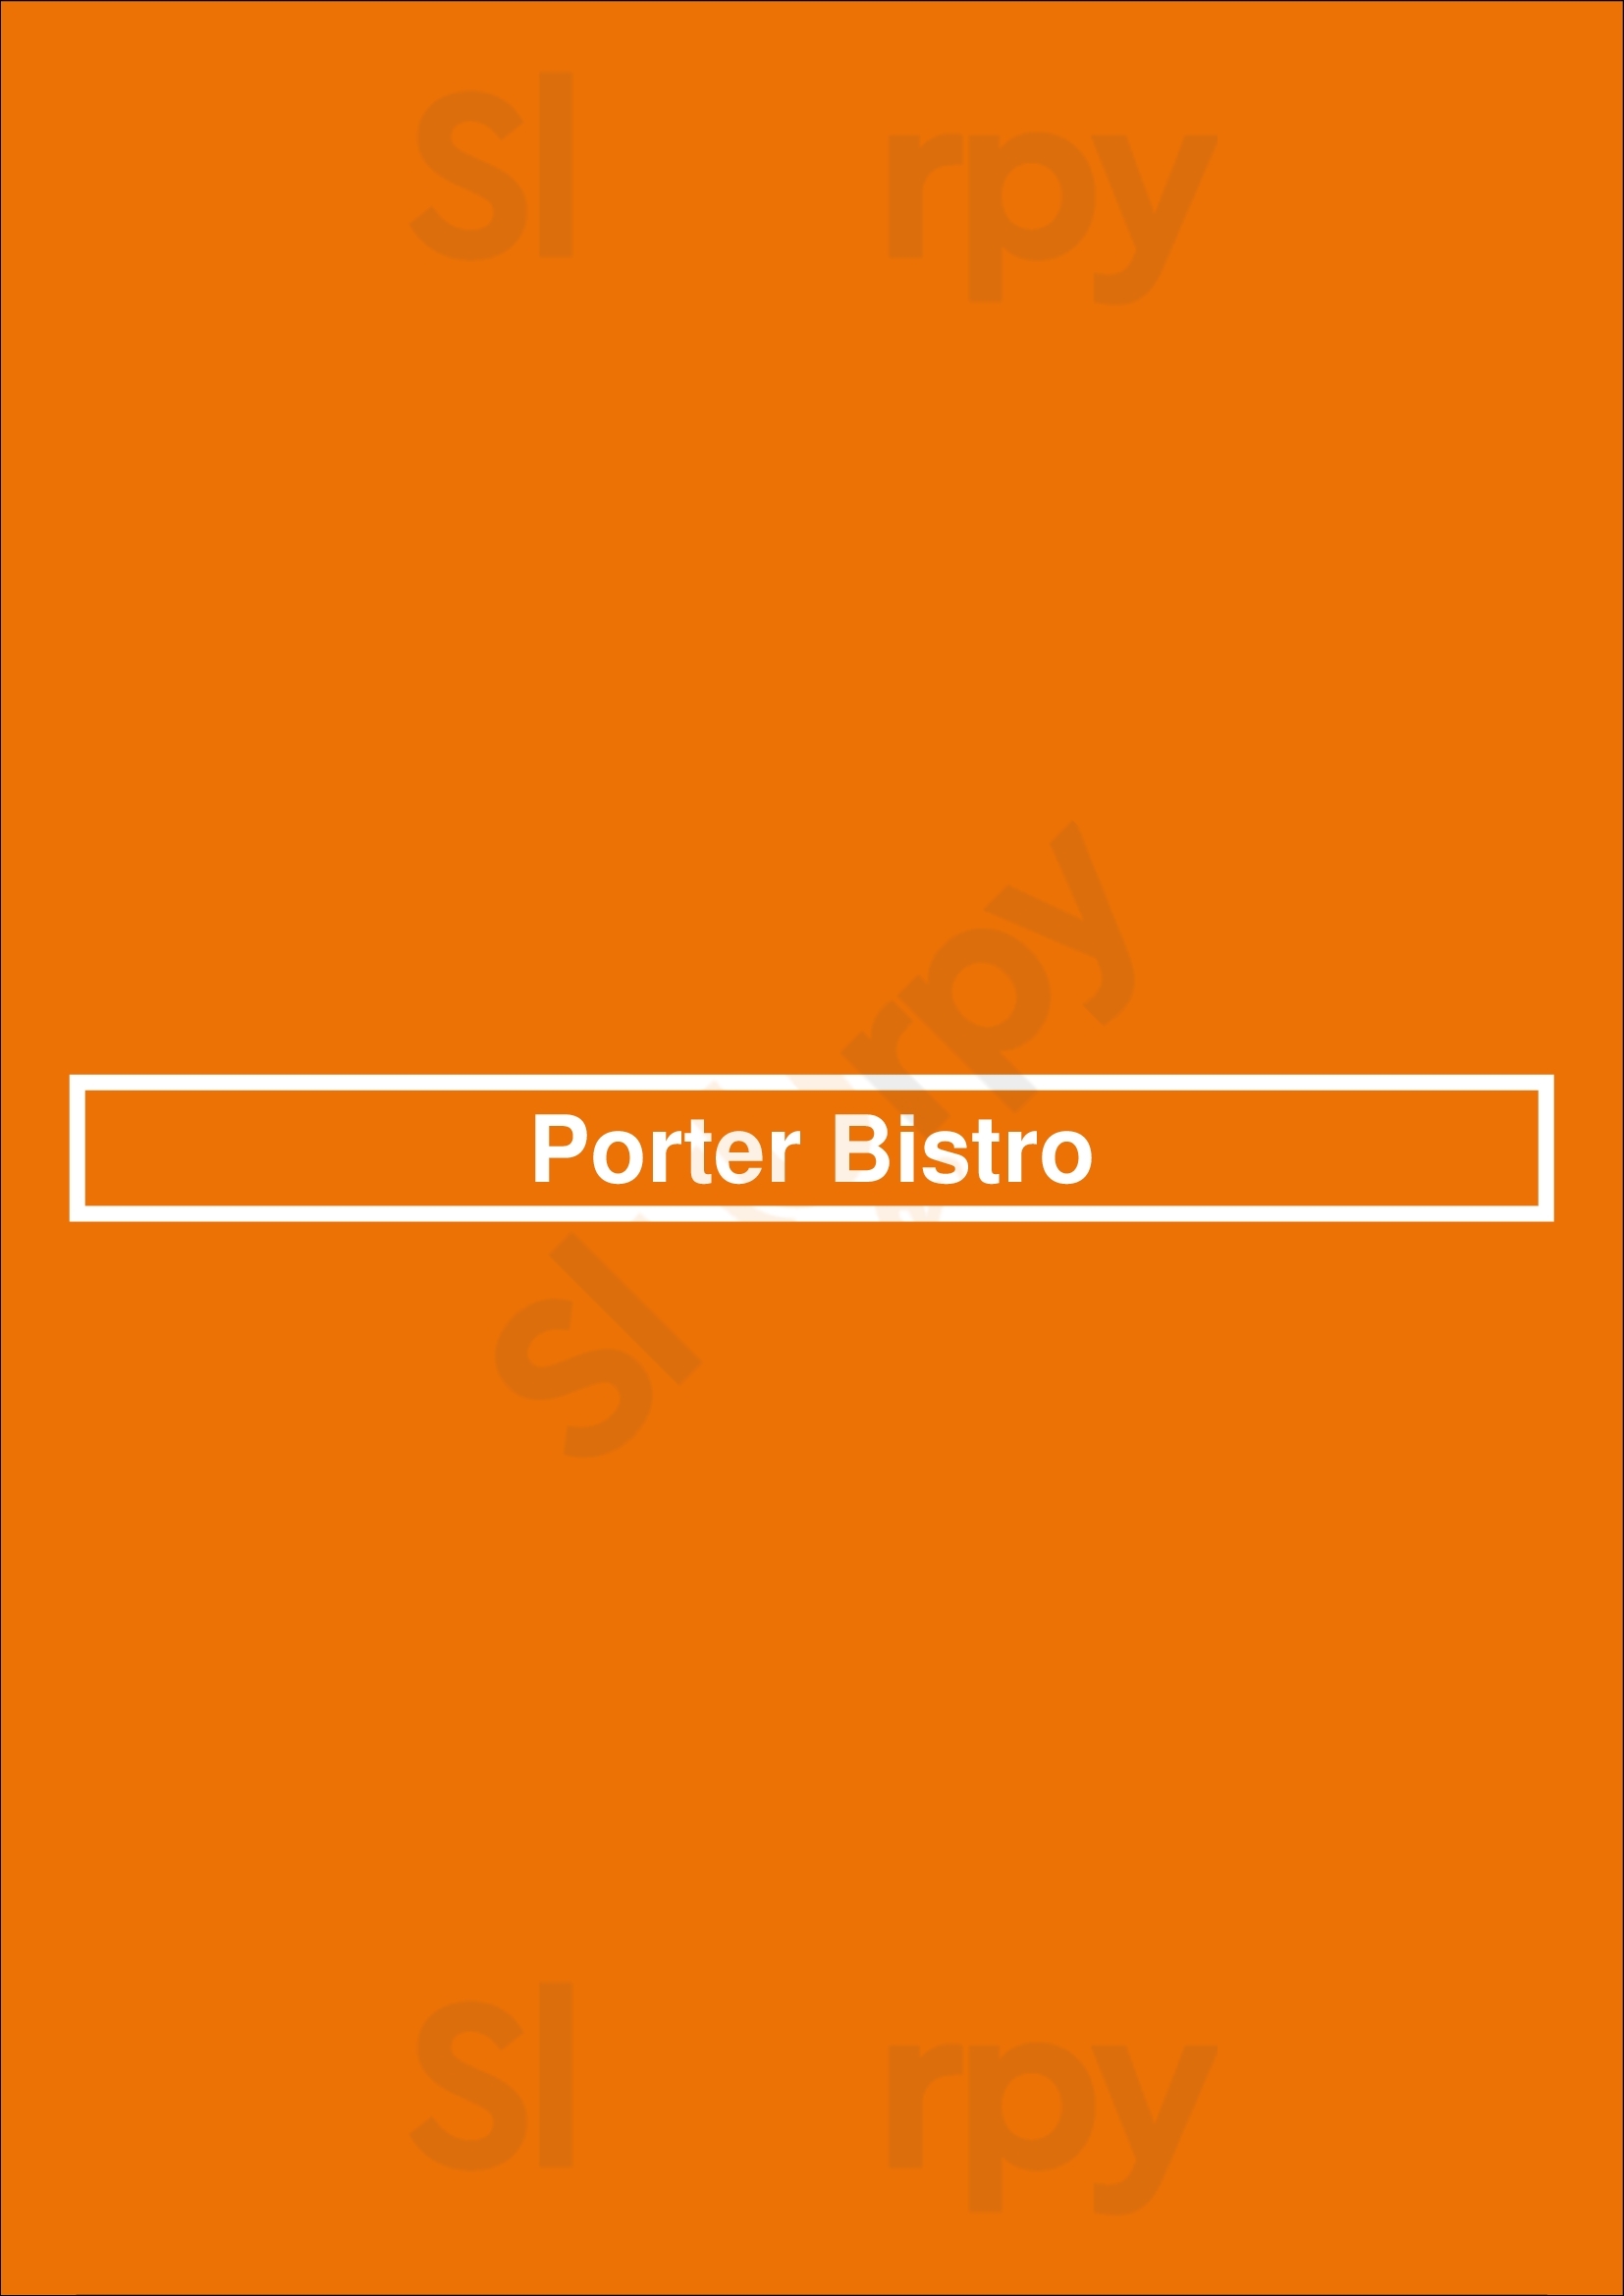 Porter Bistro Lisboa Menu - 1